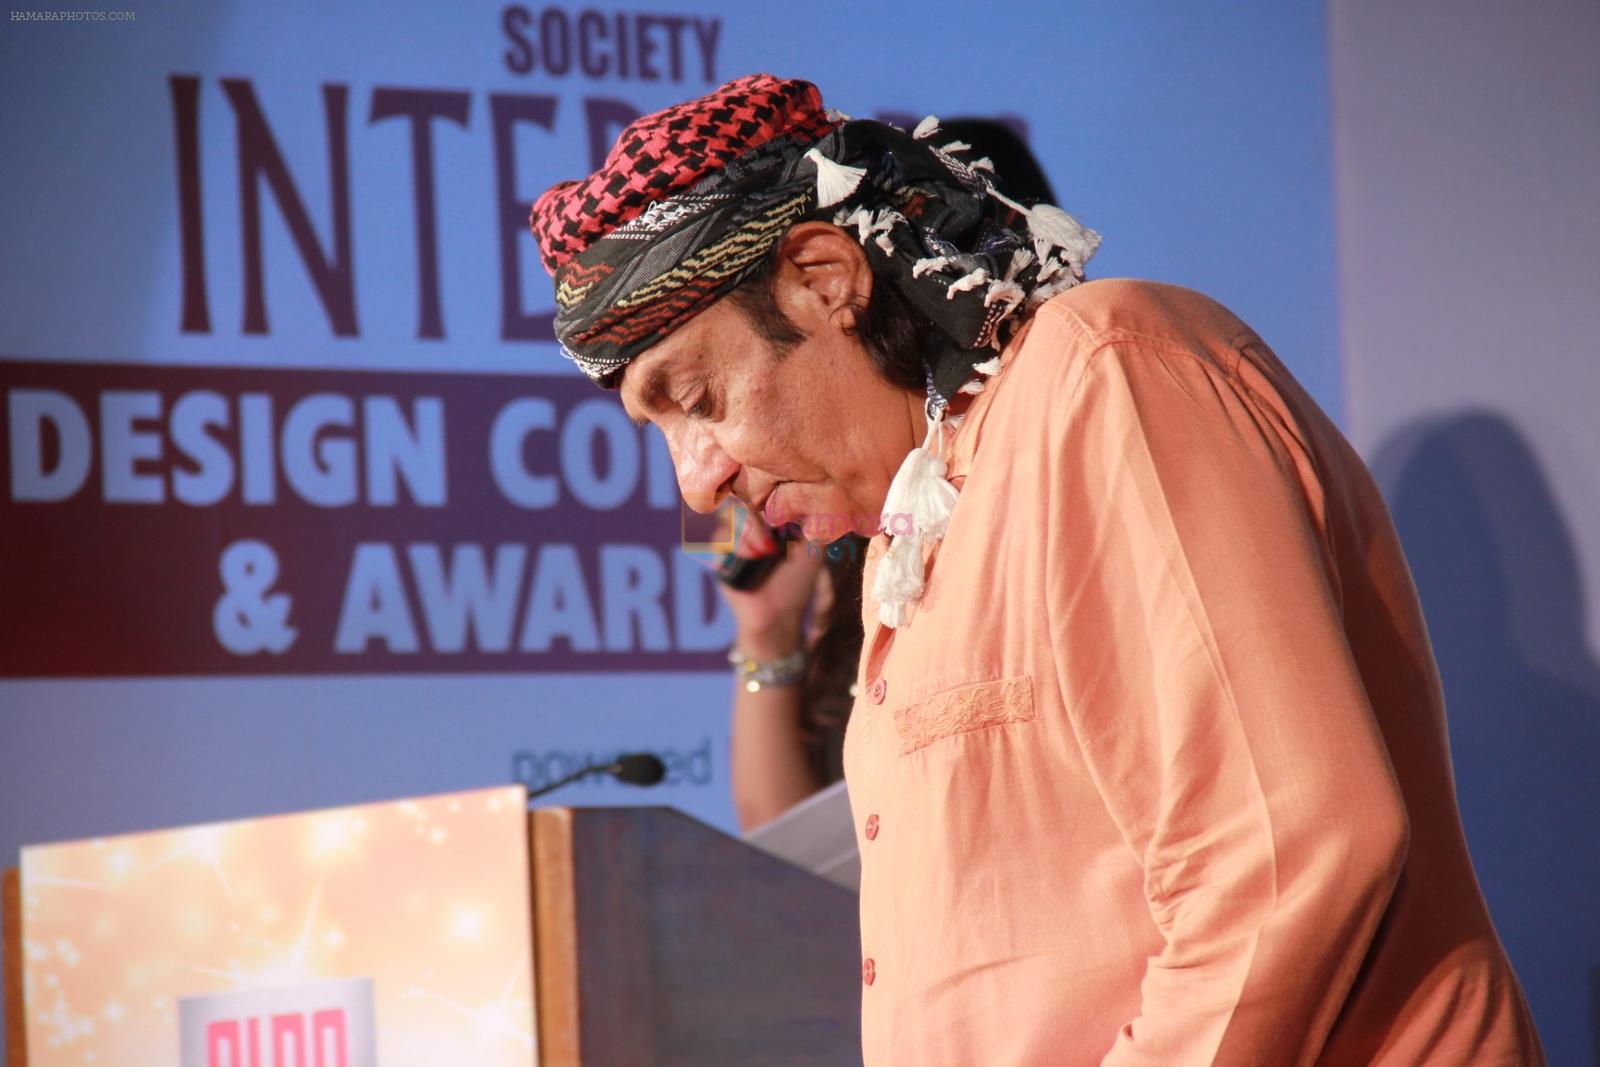 Ranjeet at Socirty Interior Awards in Mumbai on 21st Feb 2015